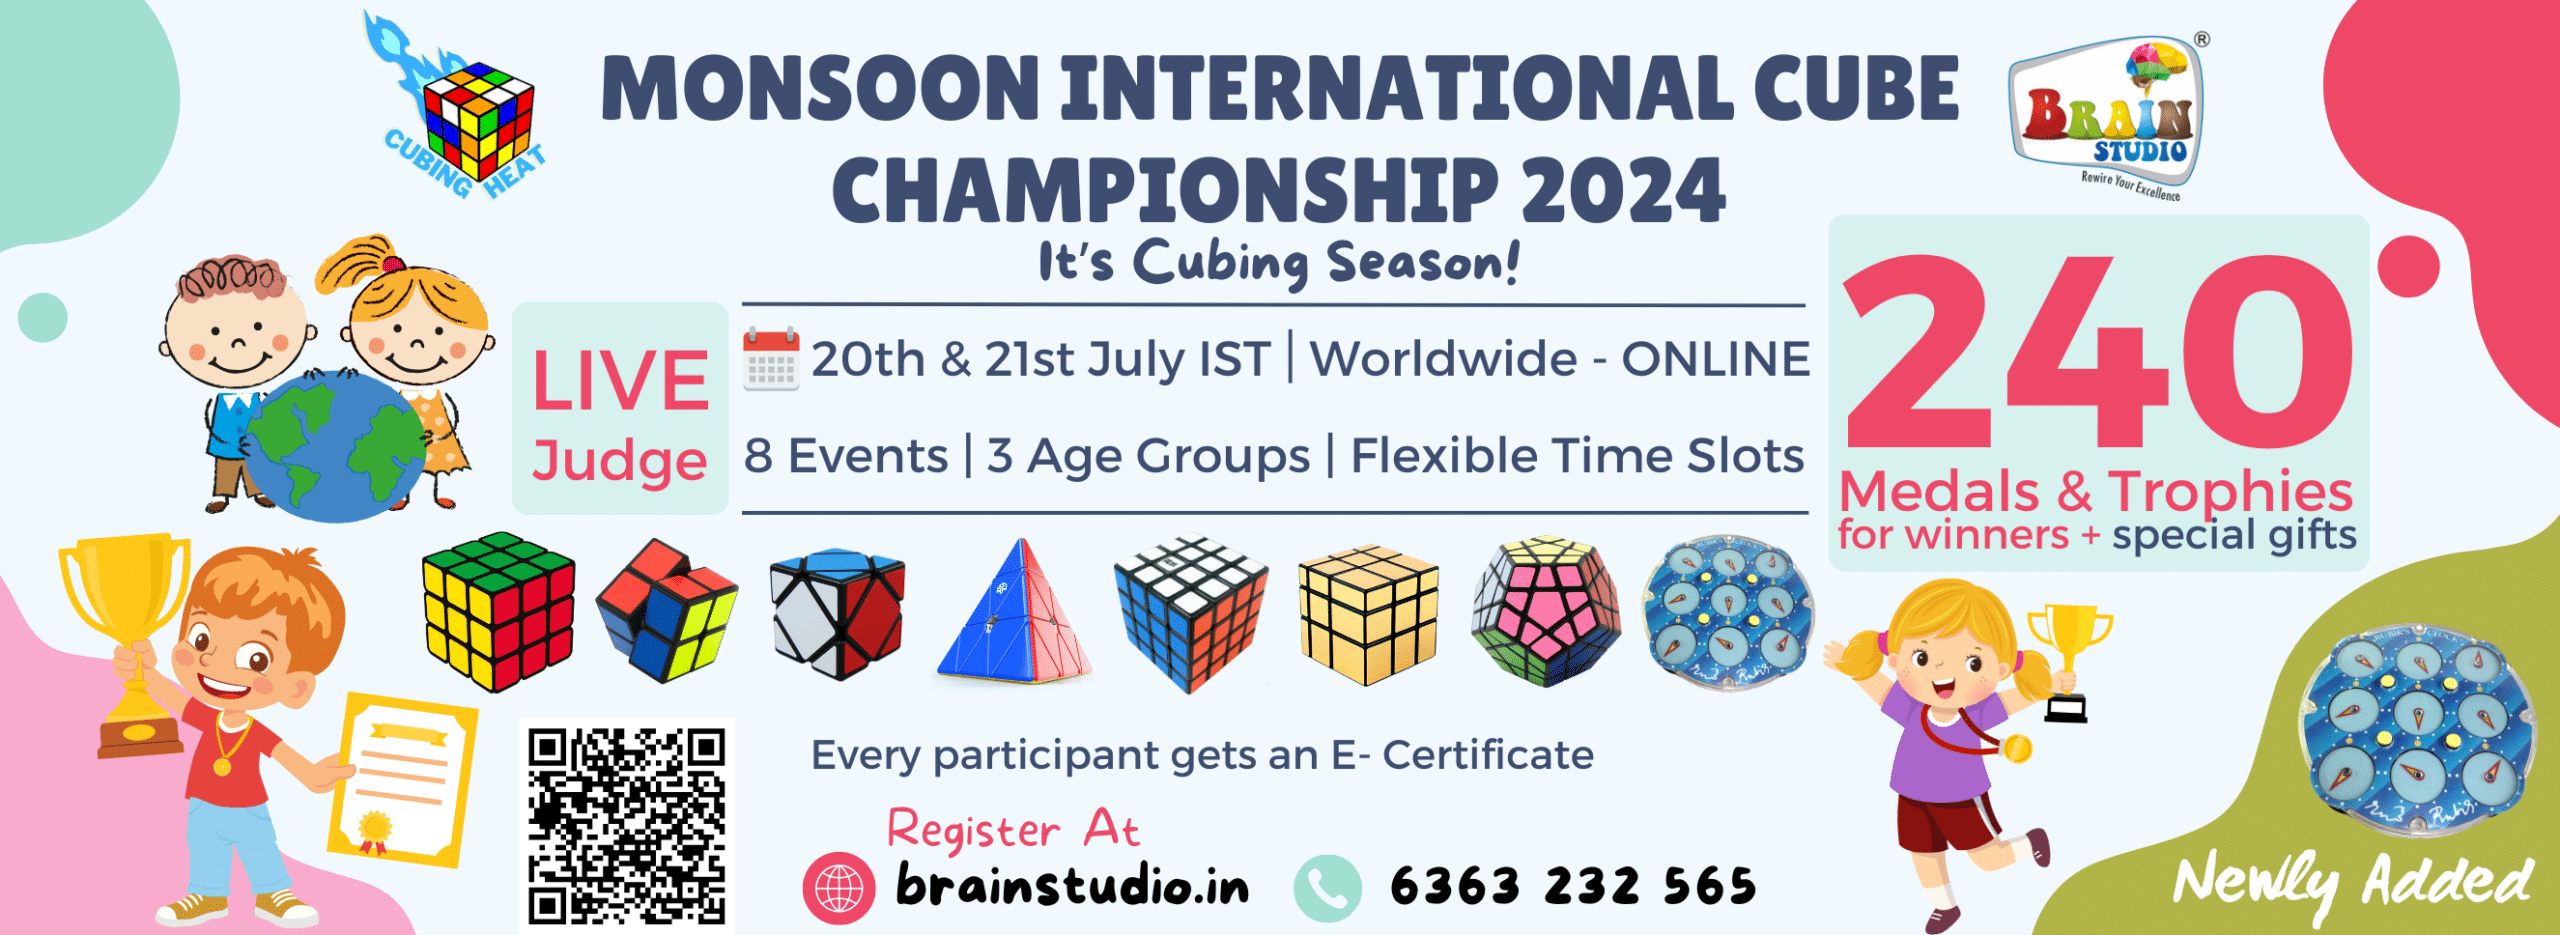 Monsoon-International-Cube-Championship 2024